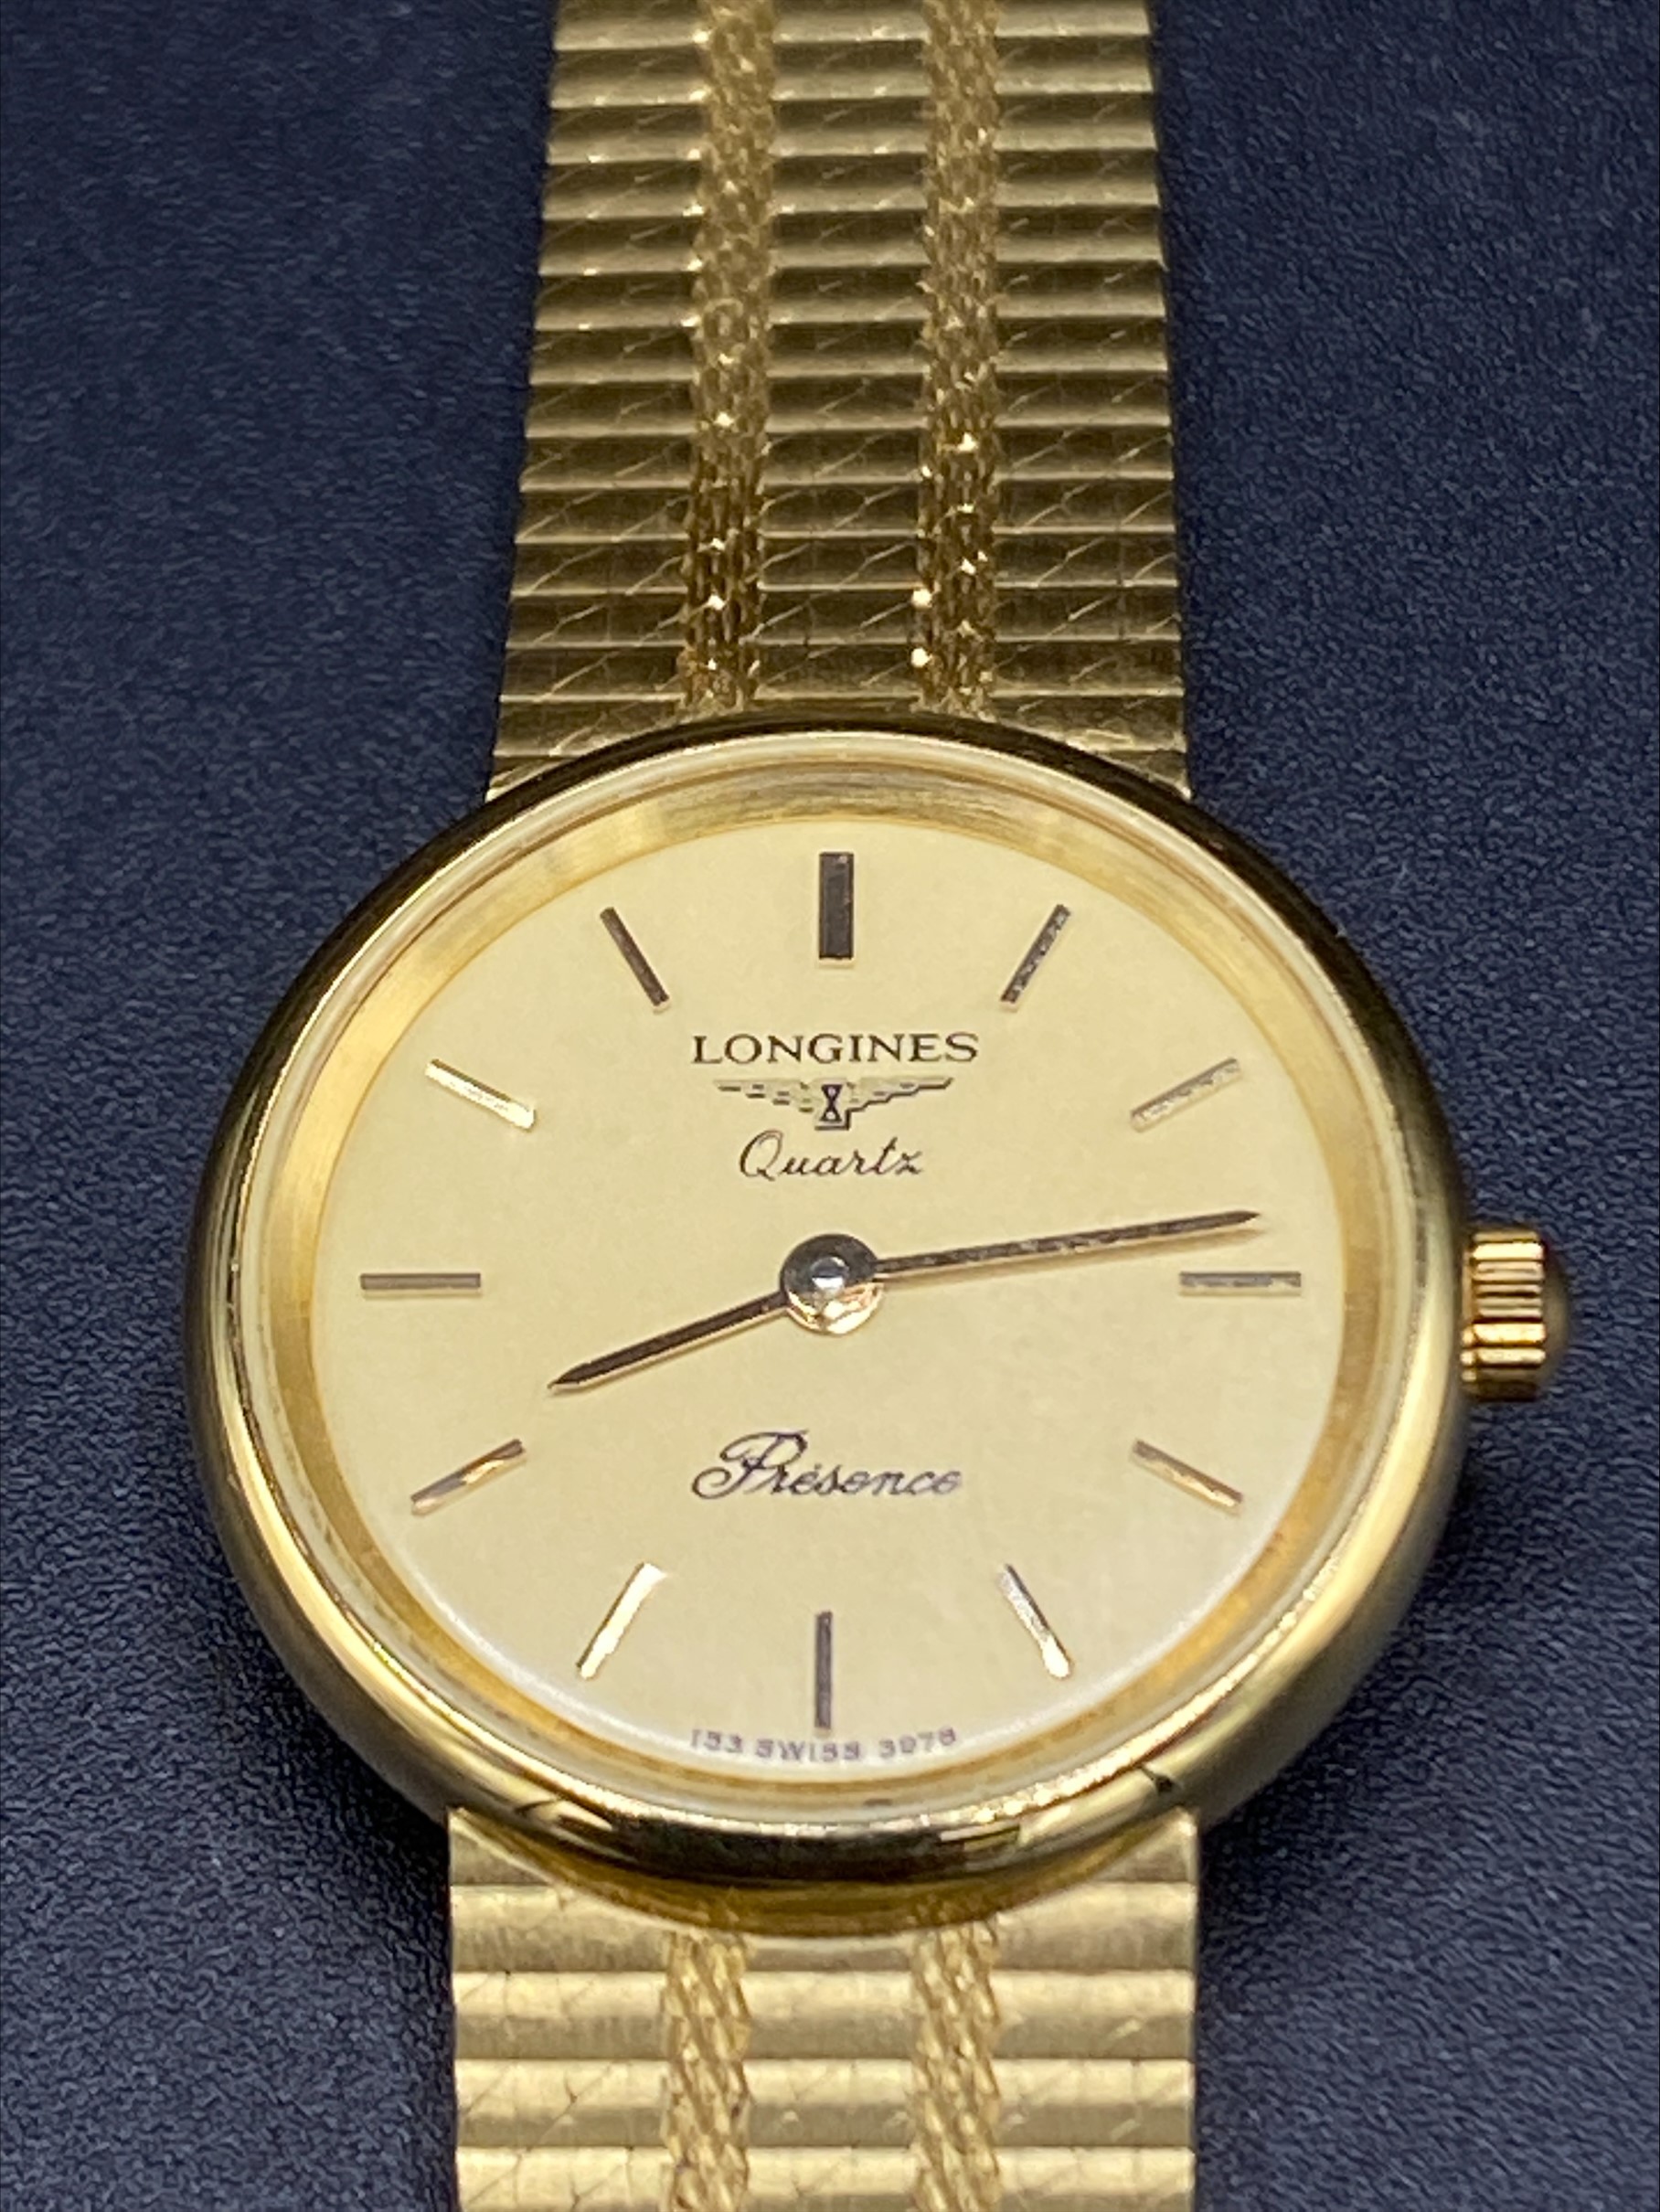 Longines 'Presence' quartz ladies' wrist watch with hallmarked 9ct gold case and strap